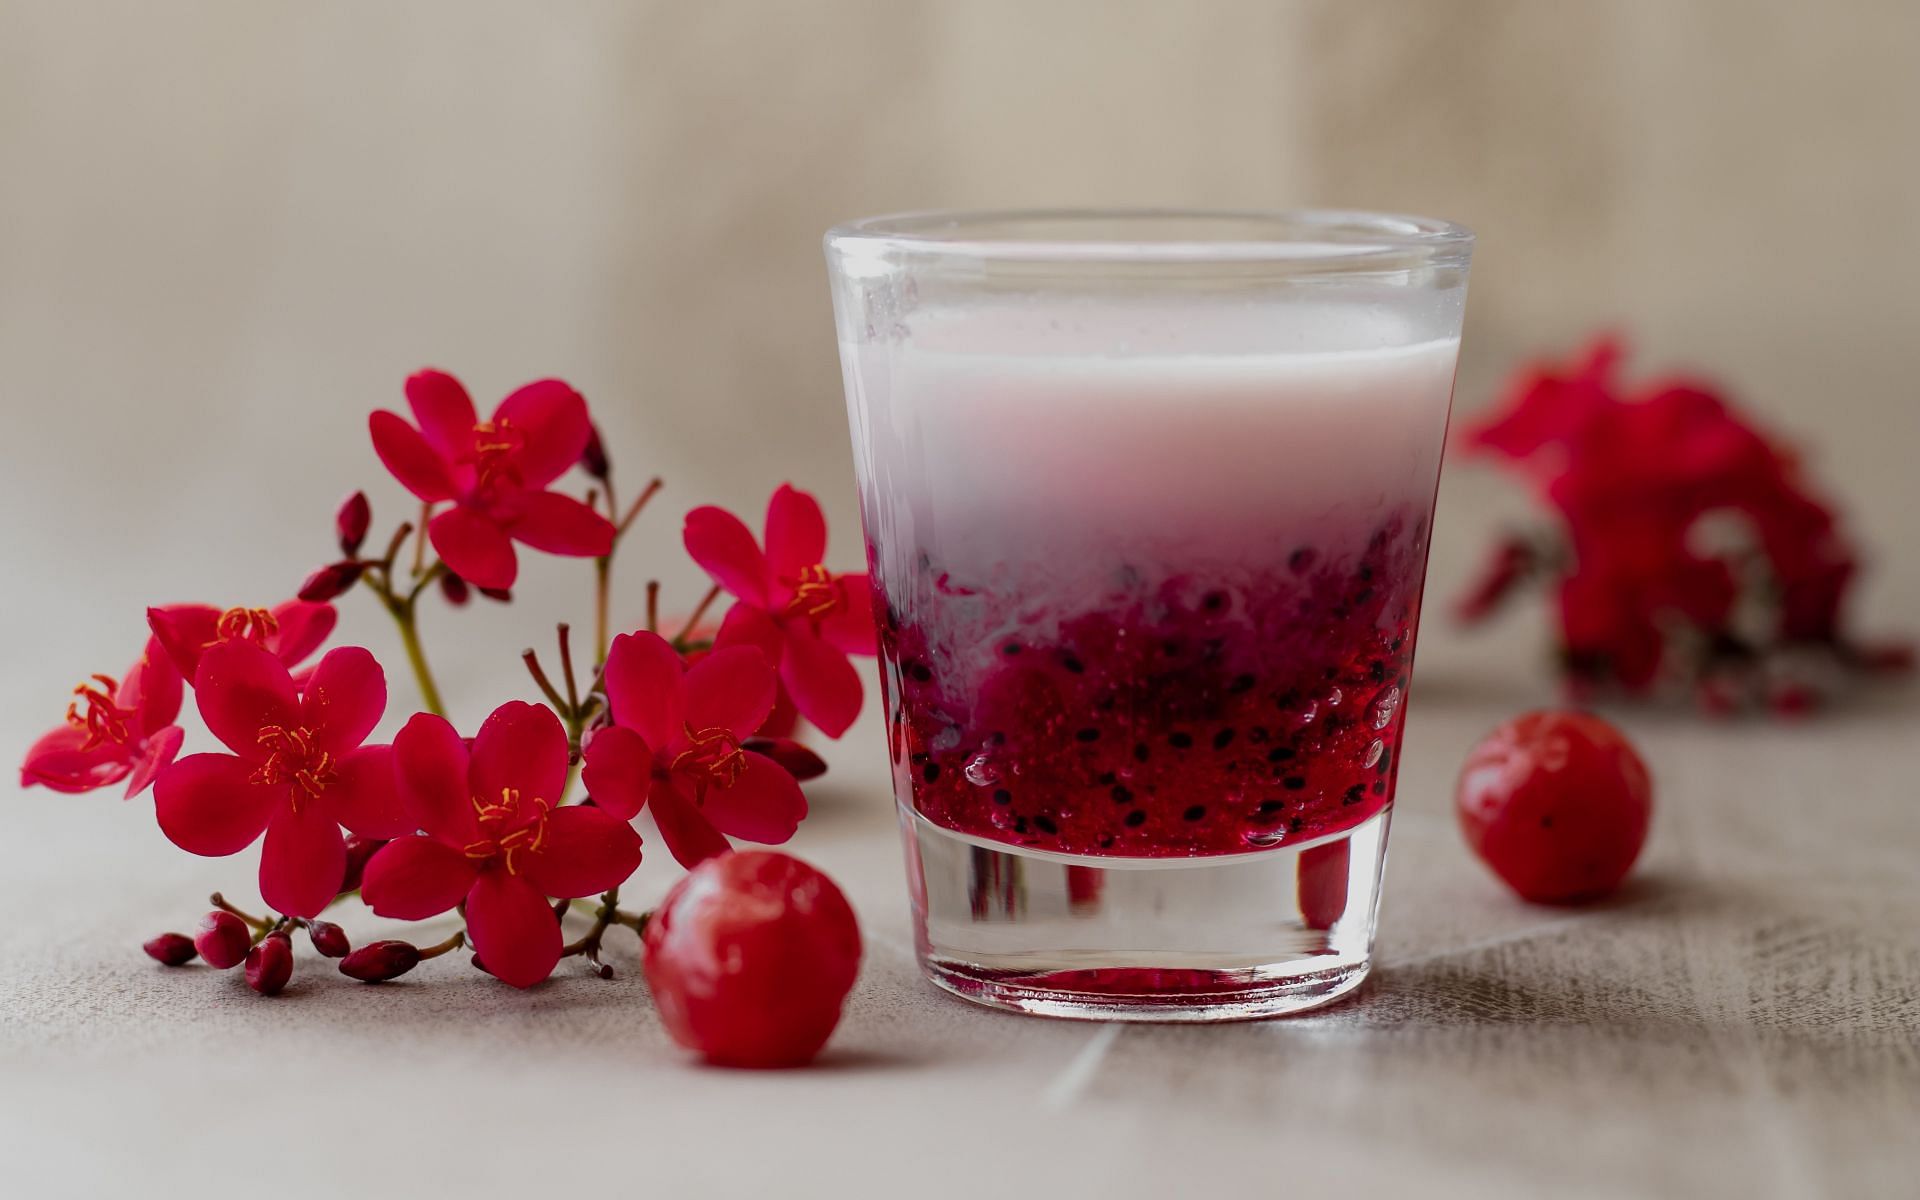 Drinks to help you sleep -Tart cherry boosts melatonin. (Image via Unsplash/VD Photography)